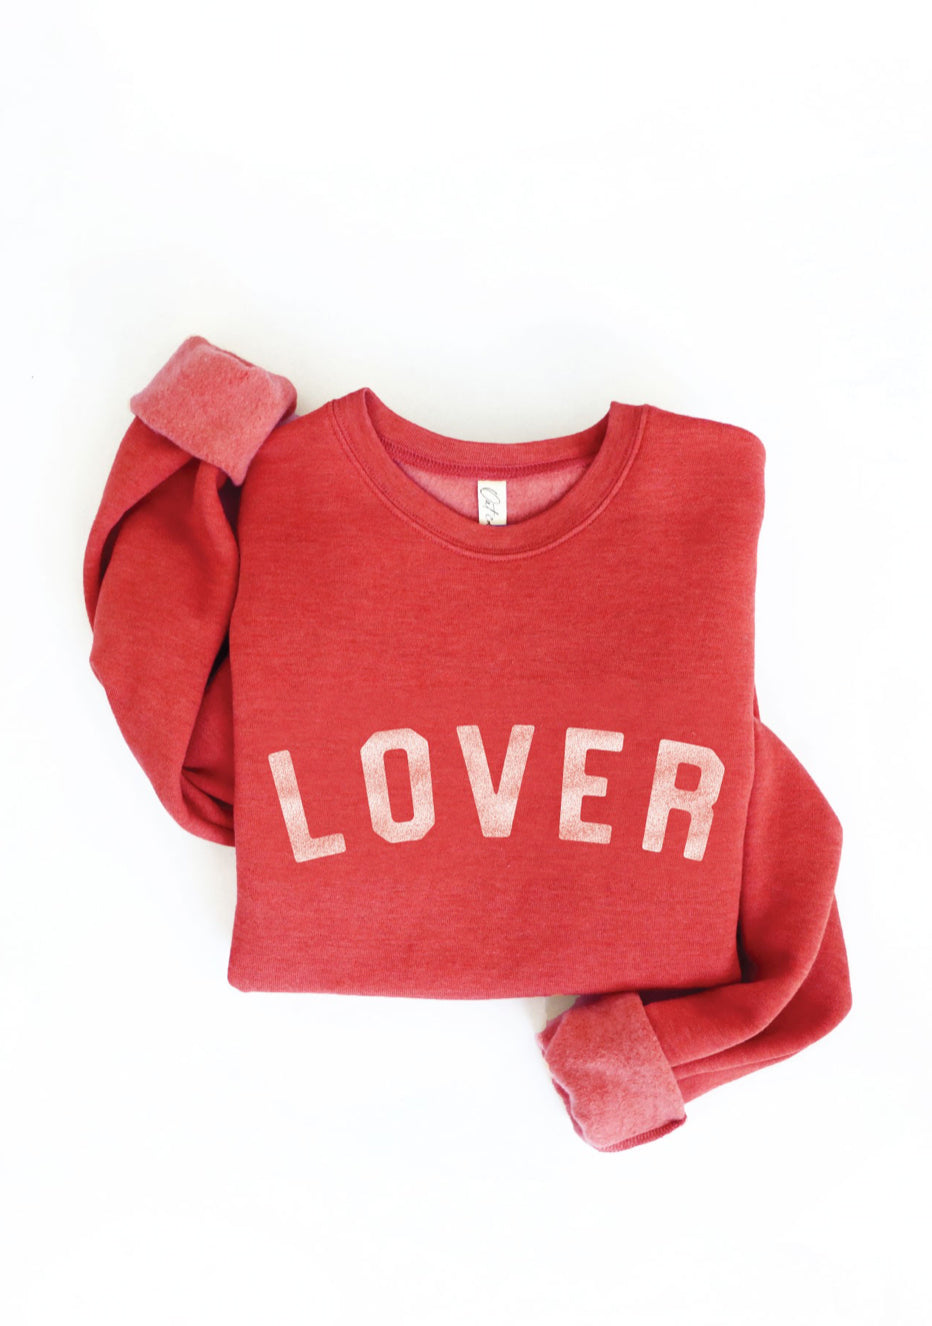 LOVER Cloud Spun Sweatshirt, Two Colors